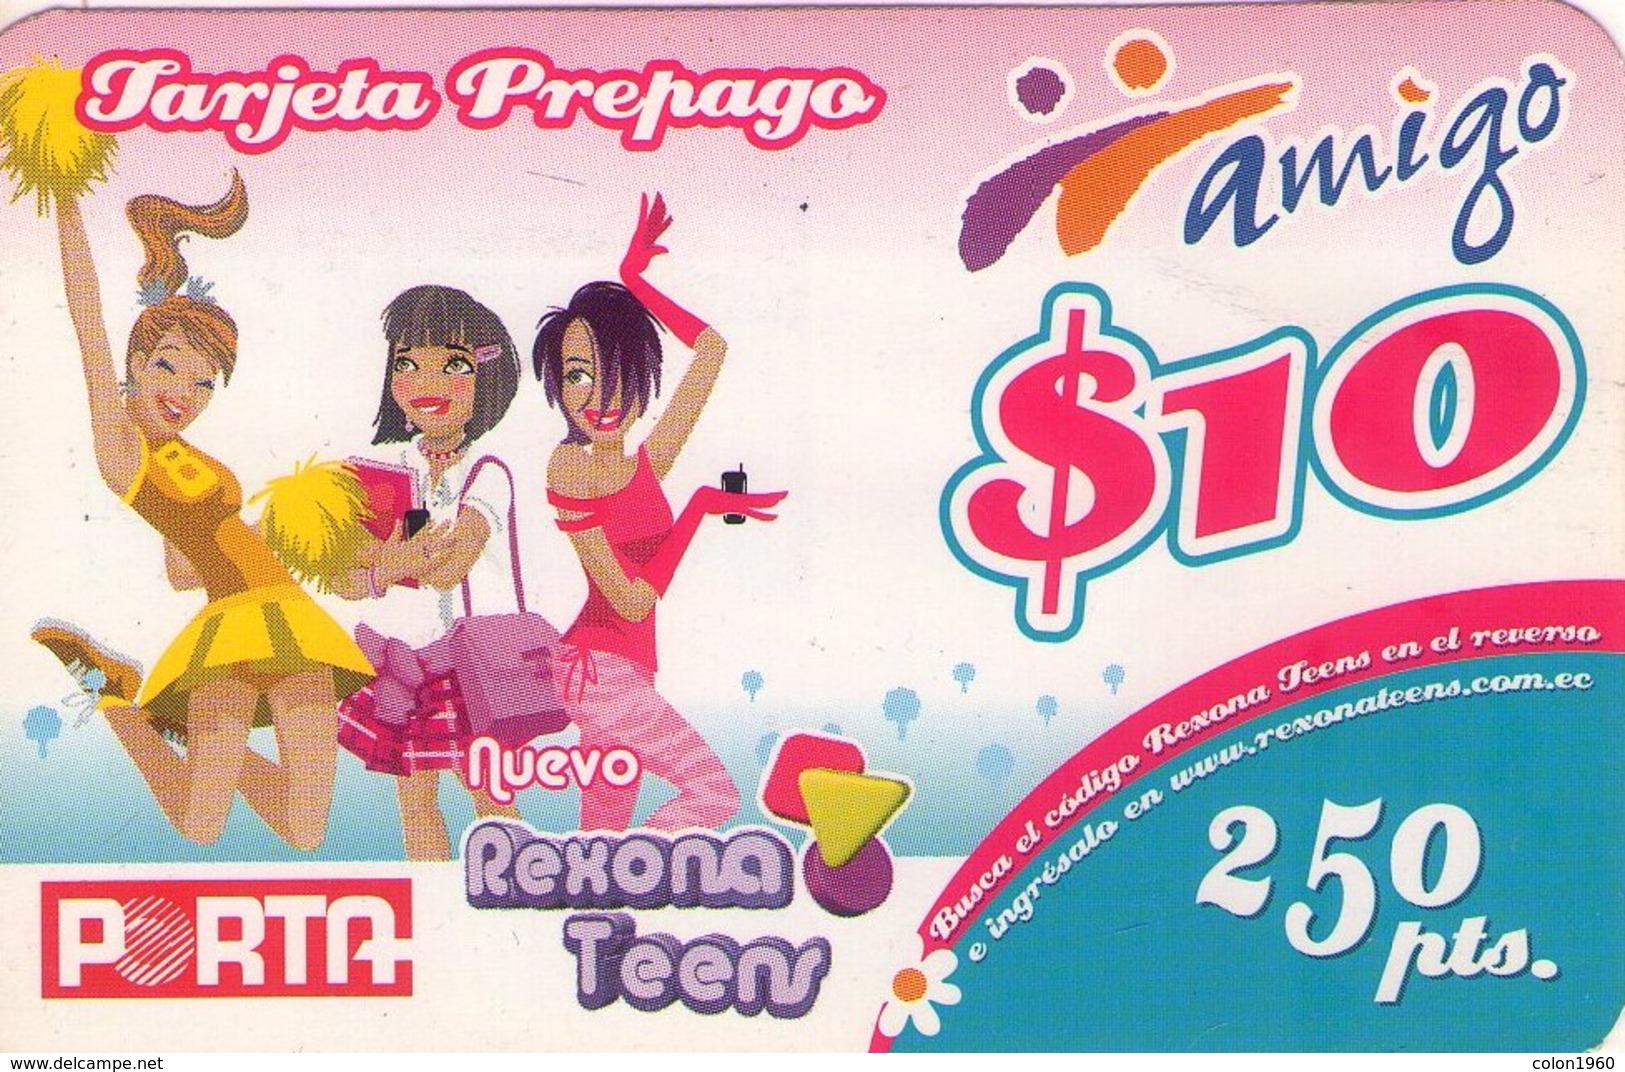 ECUADOR. PREPAGO. Rexona Teens. EC-POP-130B. (751) - Ecuador